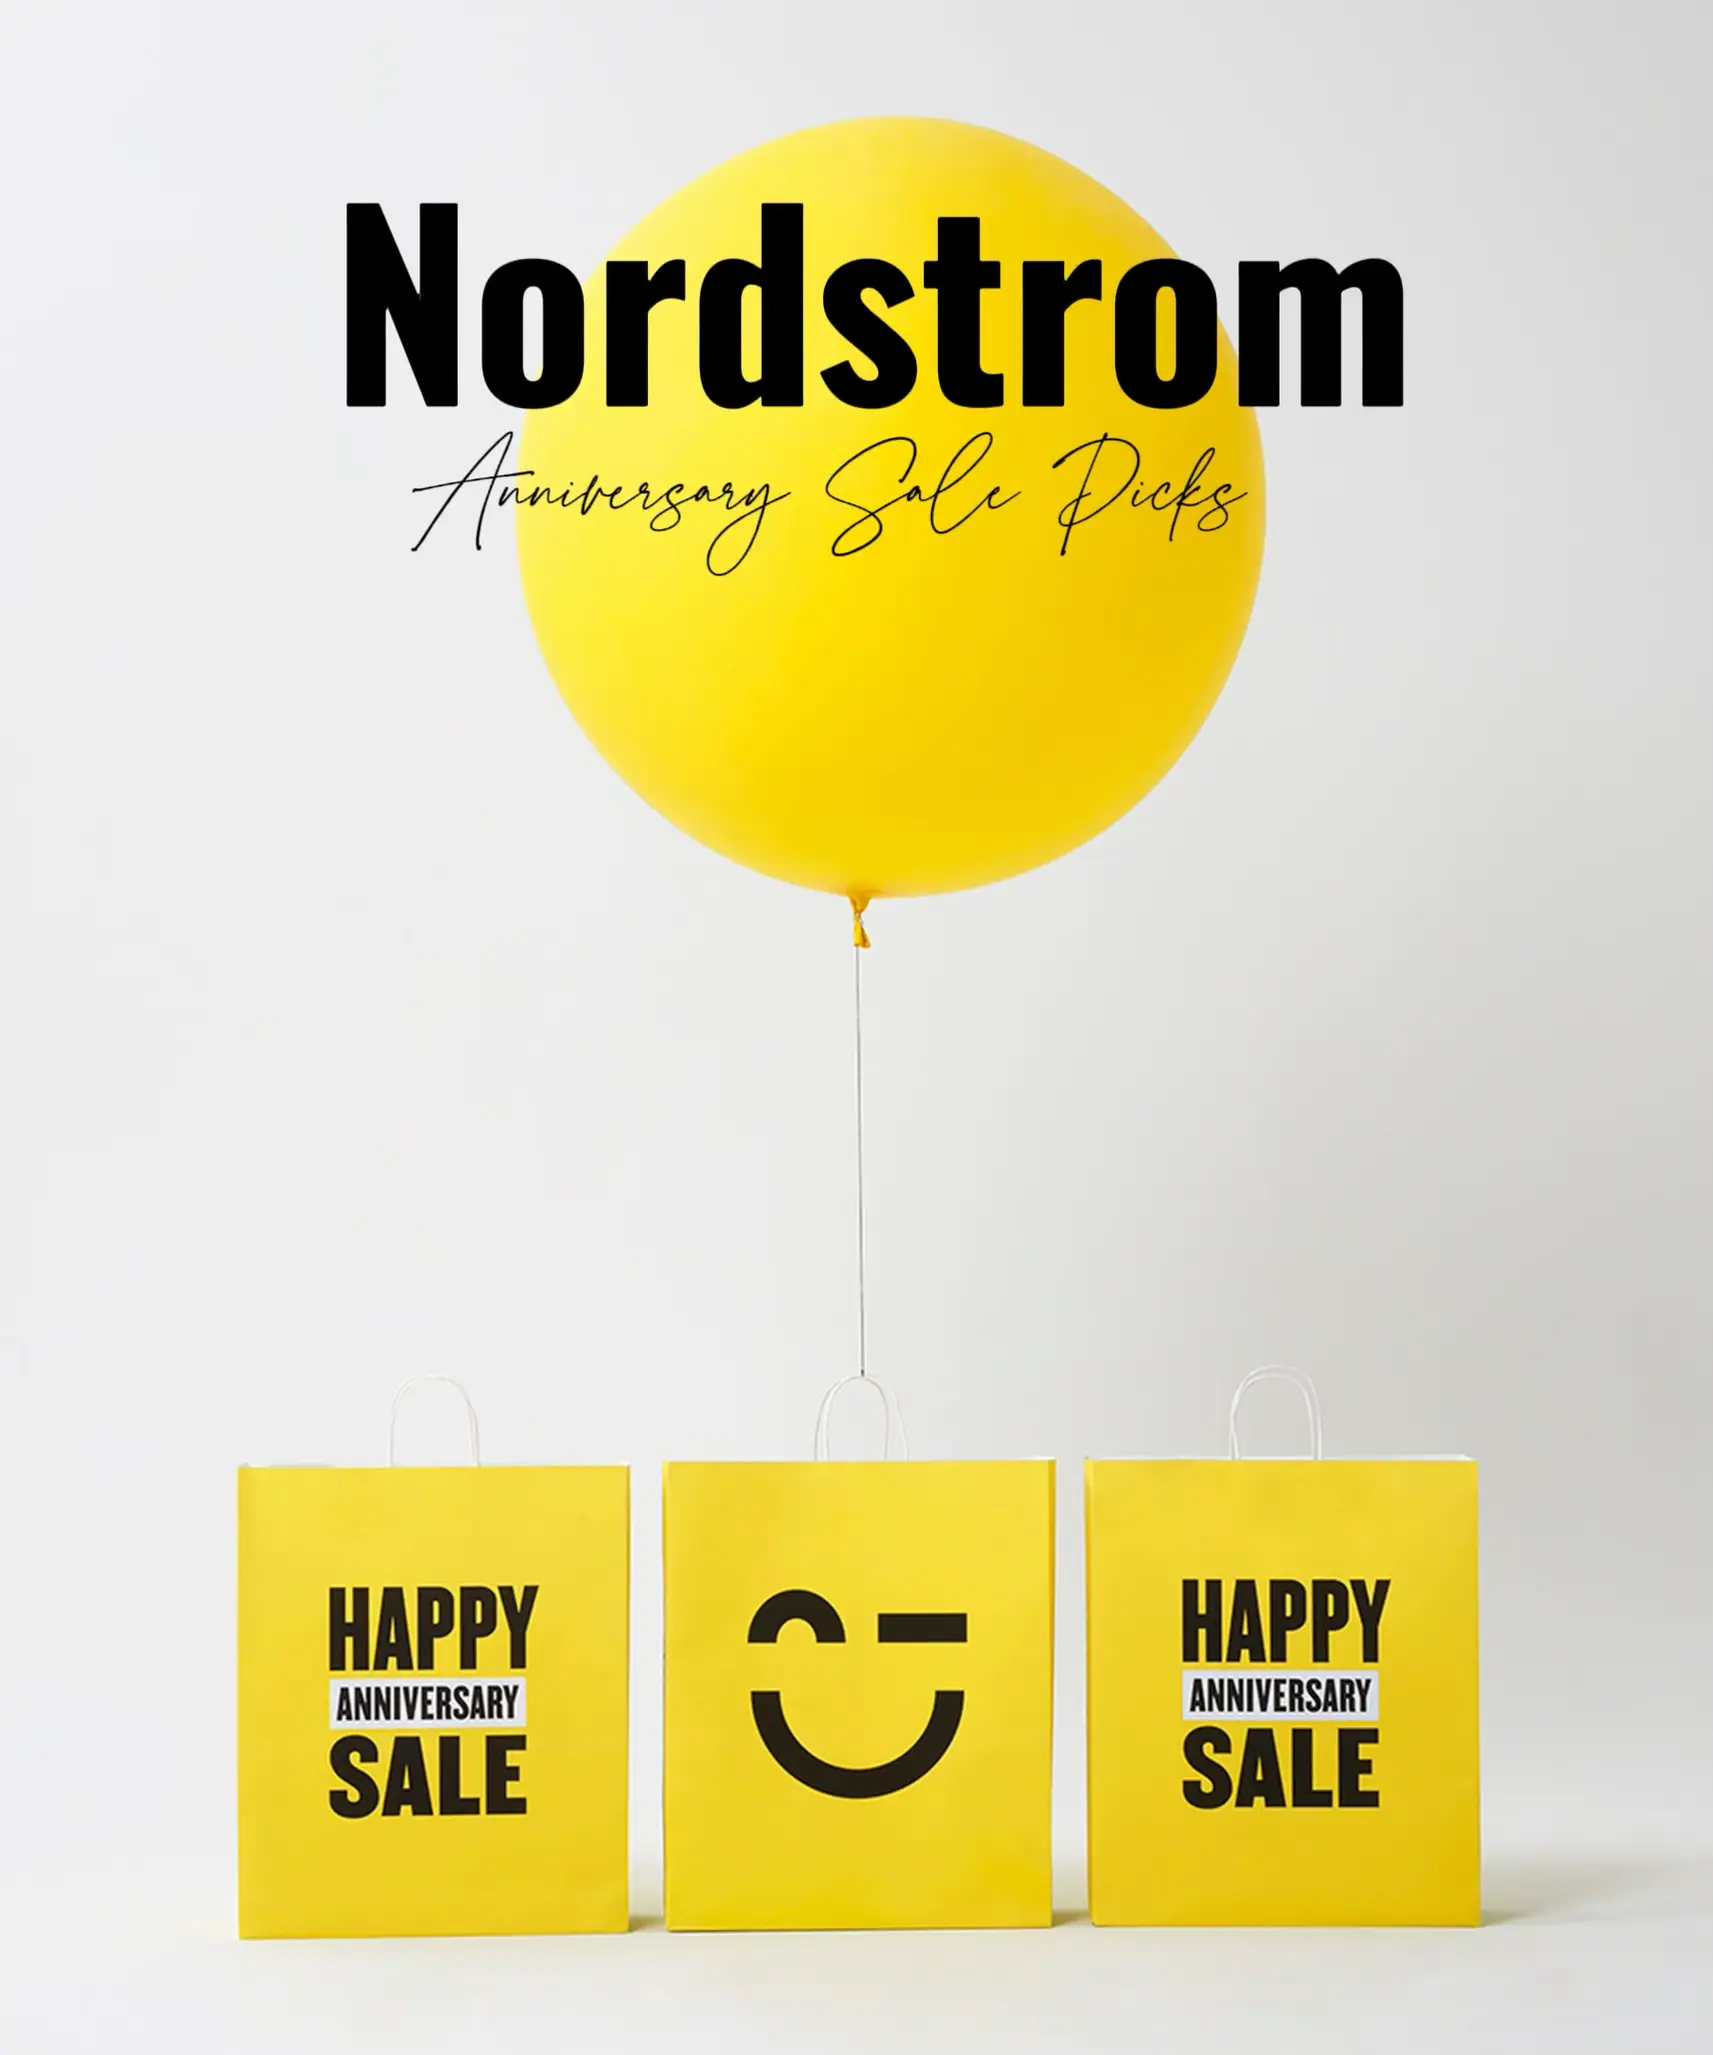 Nordstrom Anniversary Sale Picks 🛍️